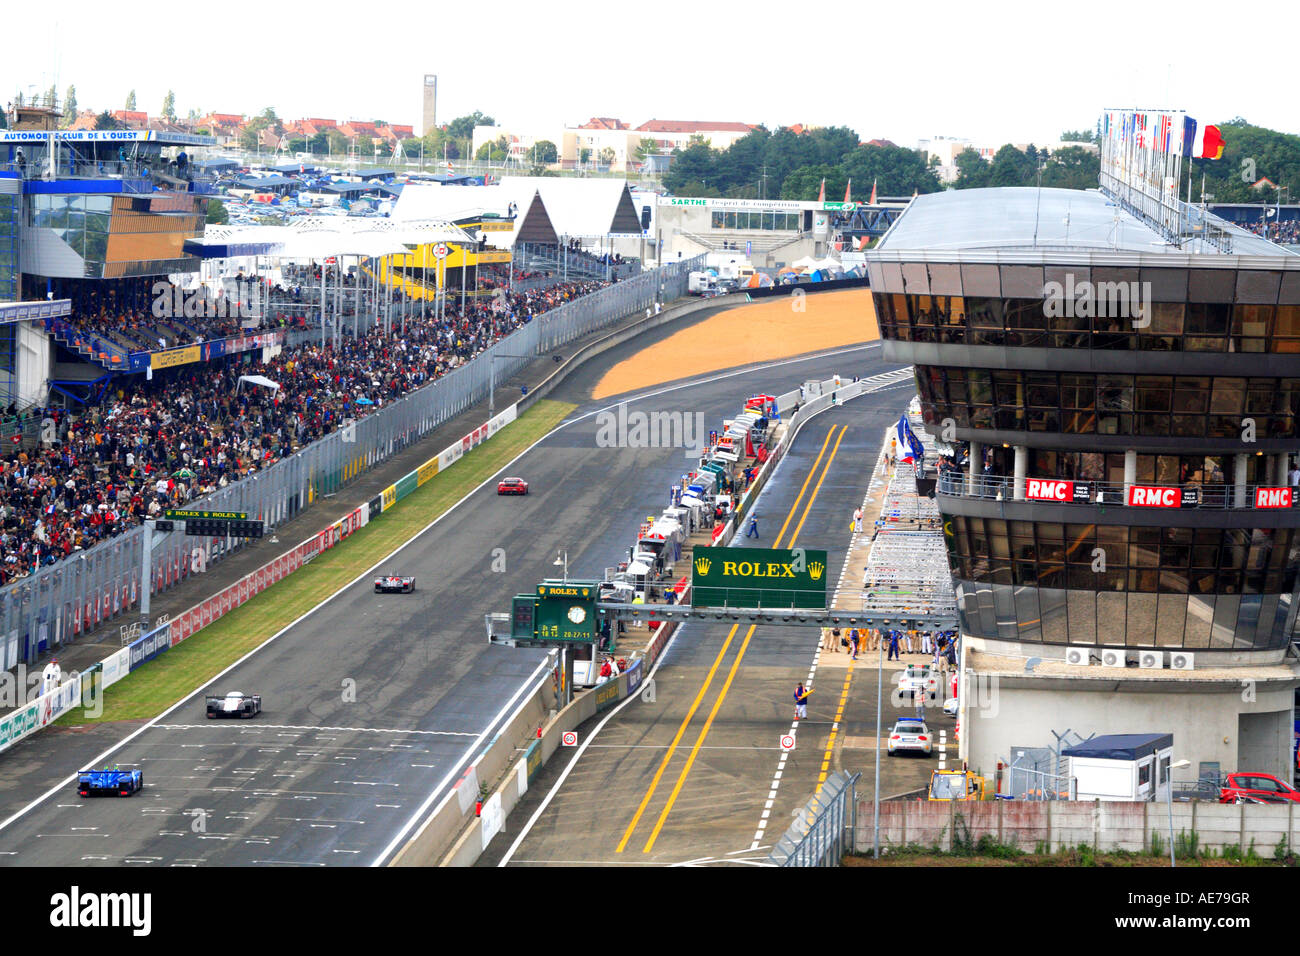 Le Mans grandstand Stock Photo Alamy